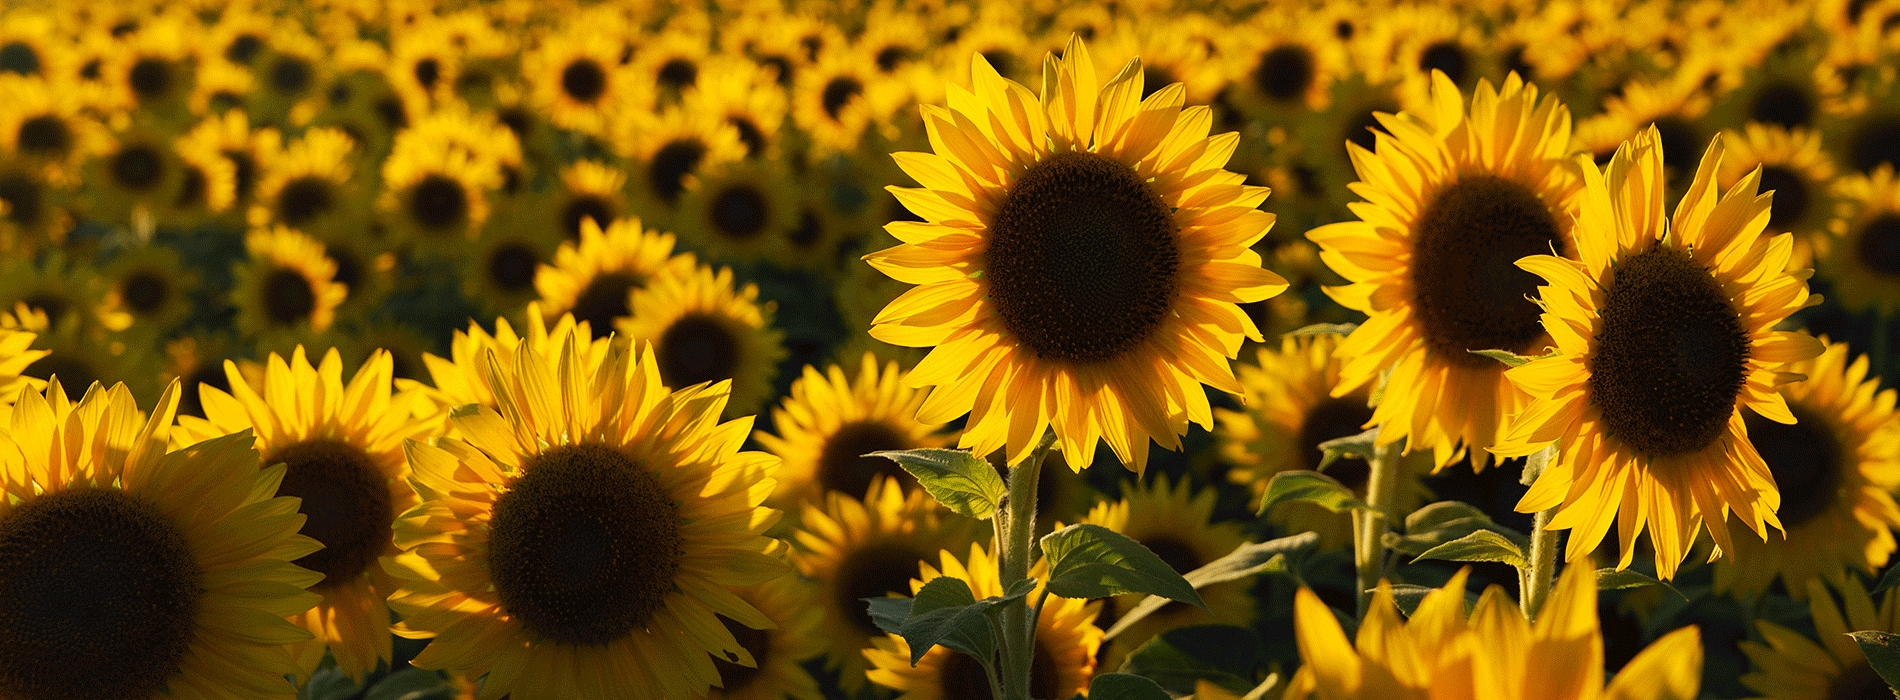 homepage sunflower gif header